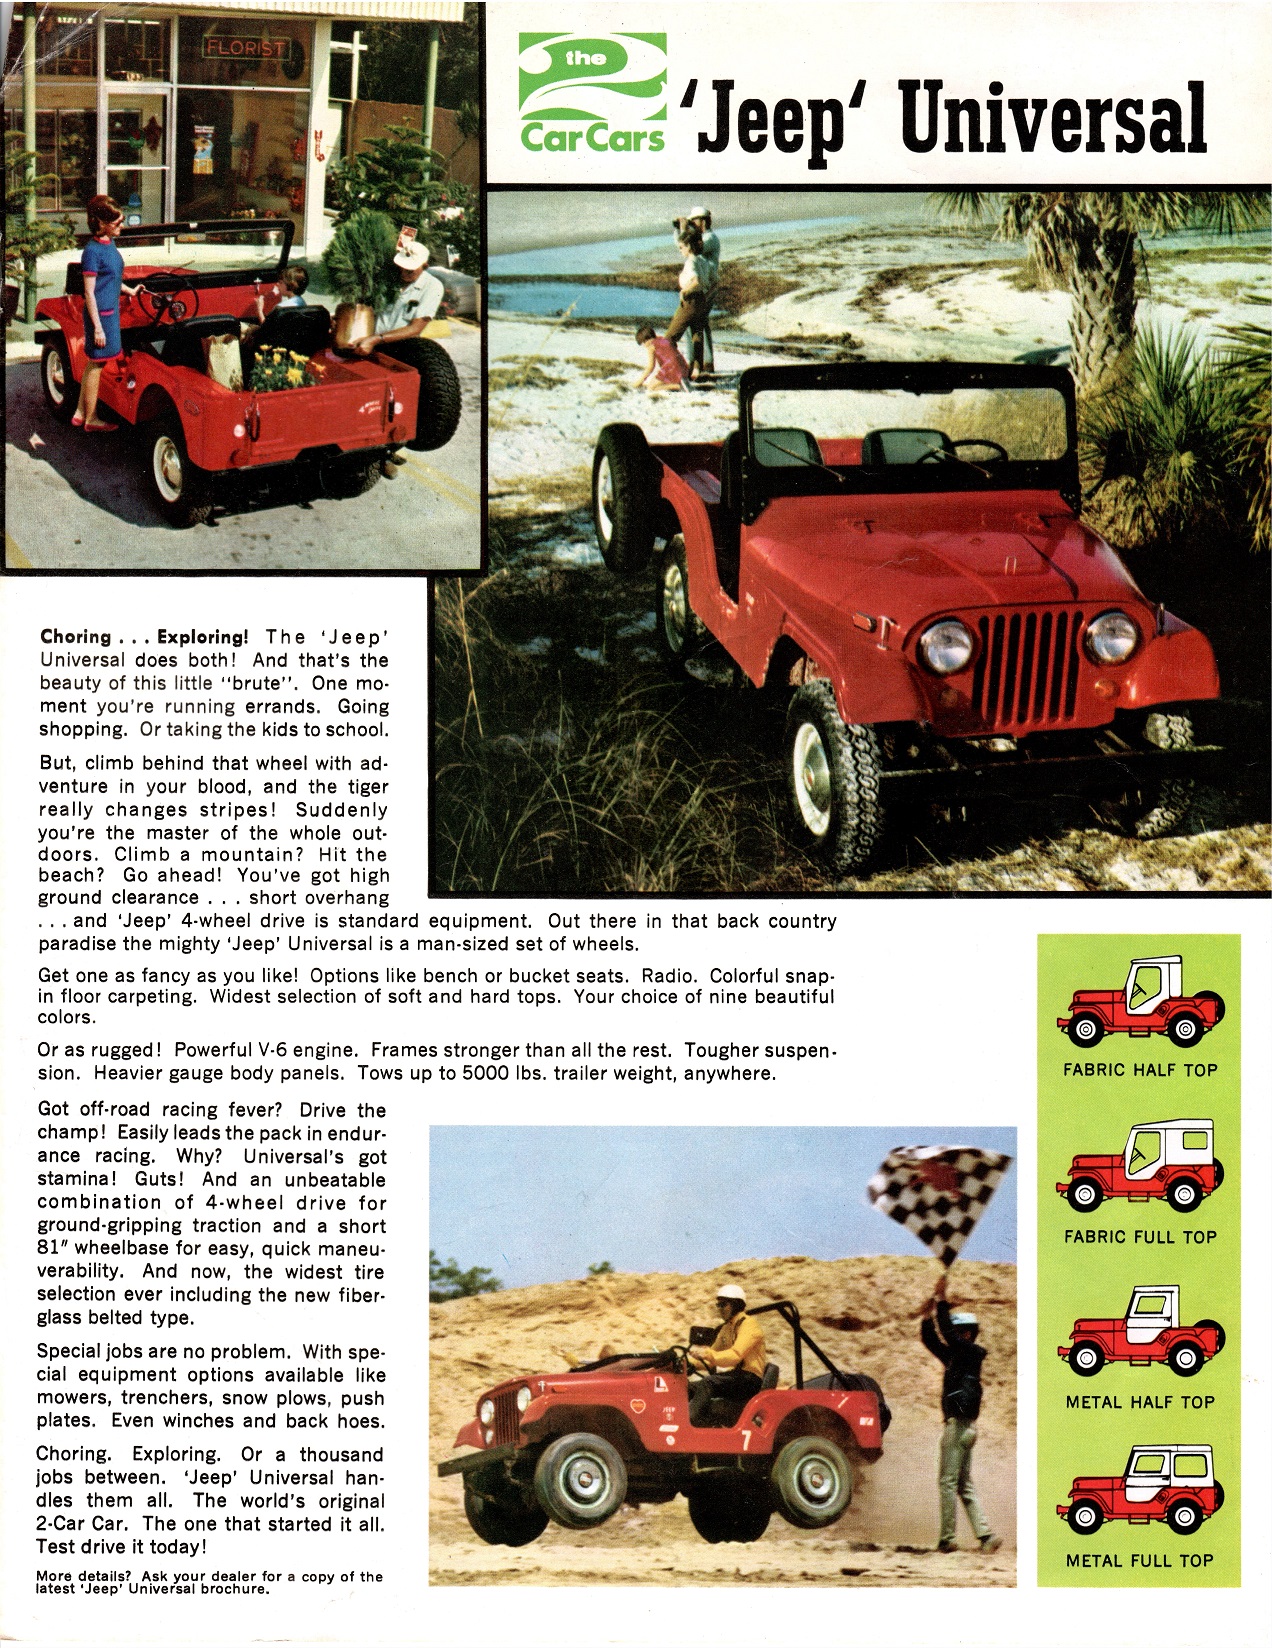 1970 Jeep Universal Sales Brochure Page 3 Resized.jpg